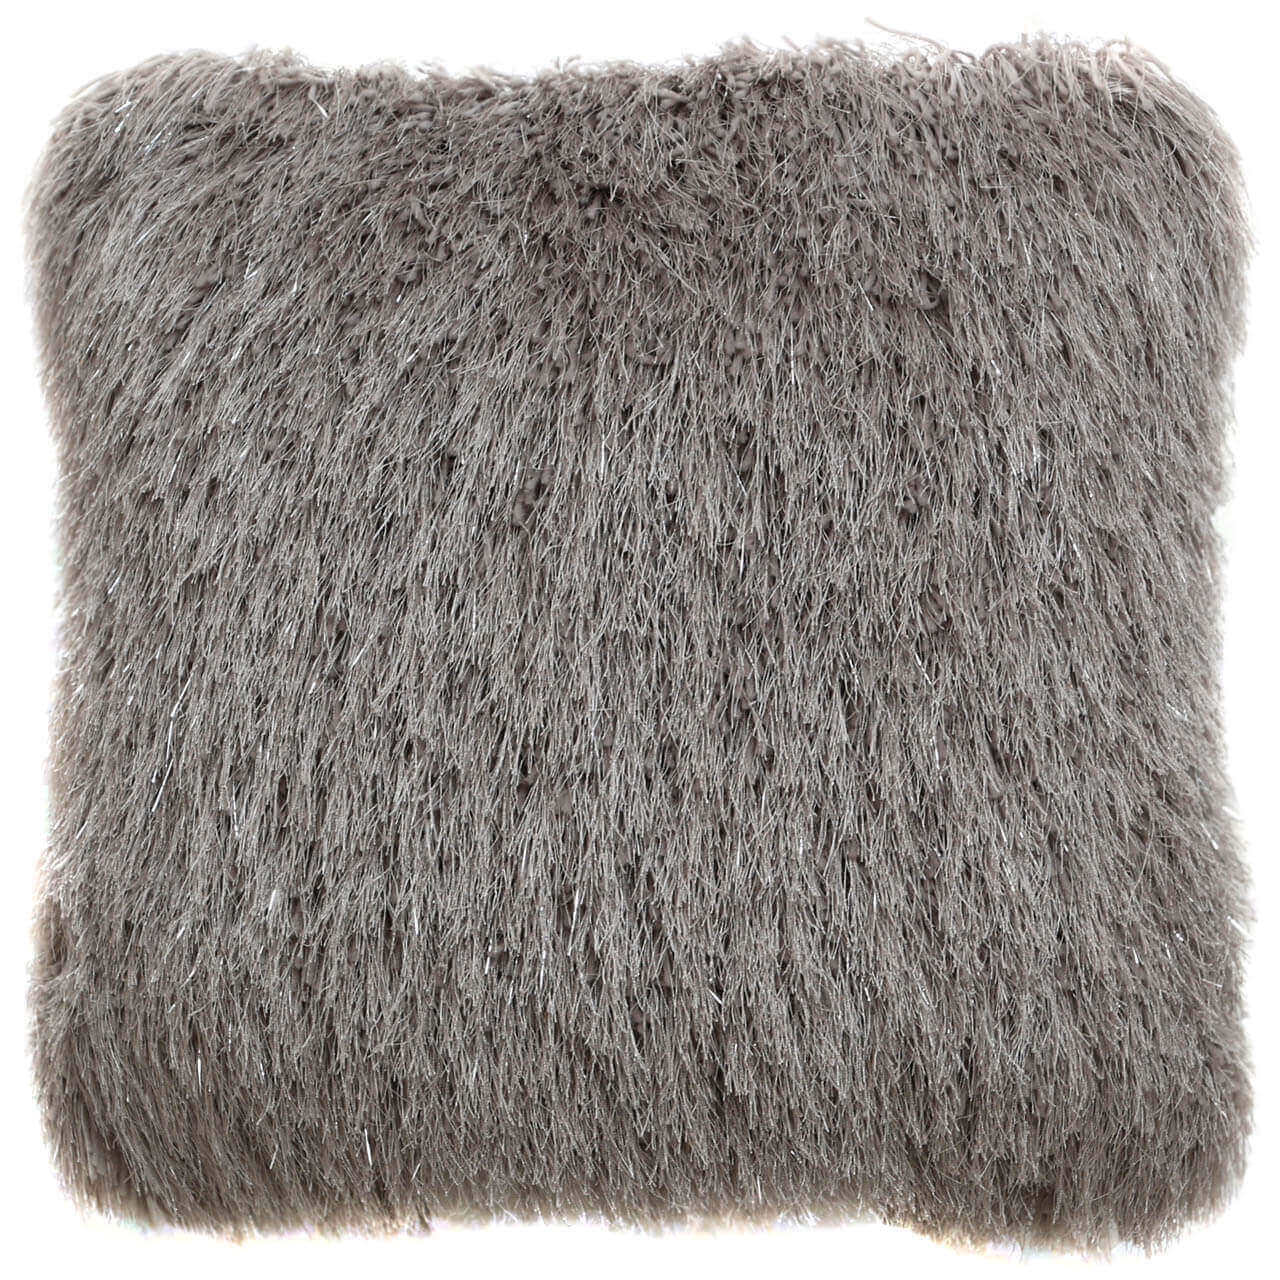 Grey Silver Faux Fur  Soft Filled  Sofa Pillow